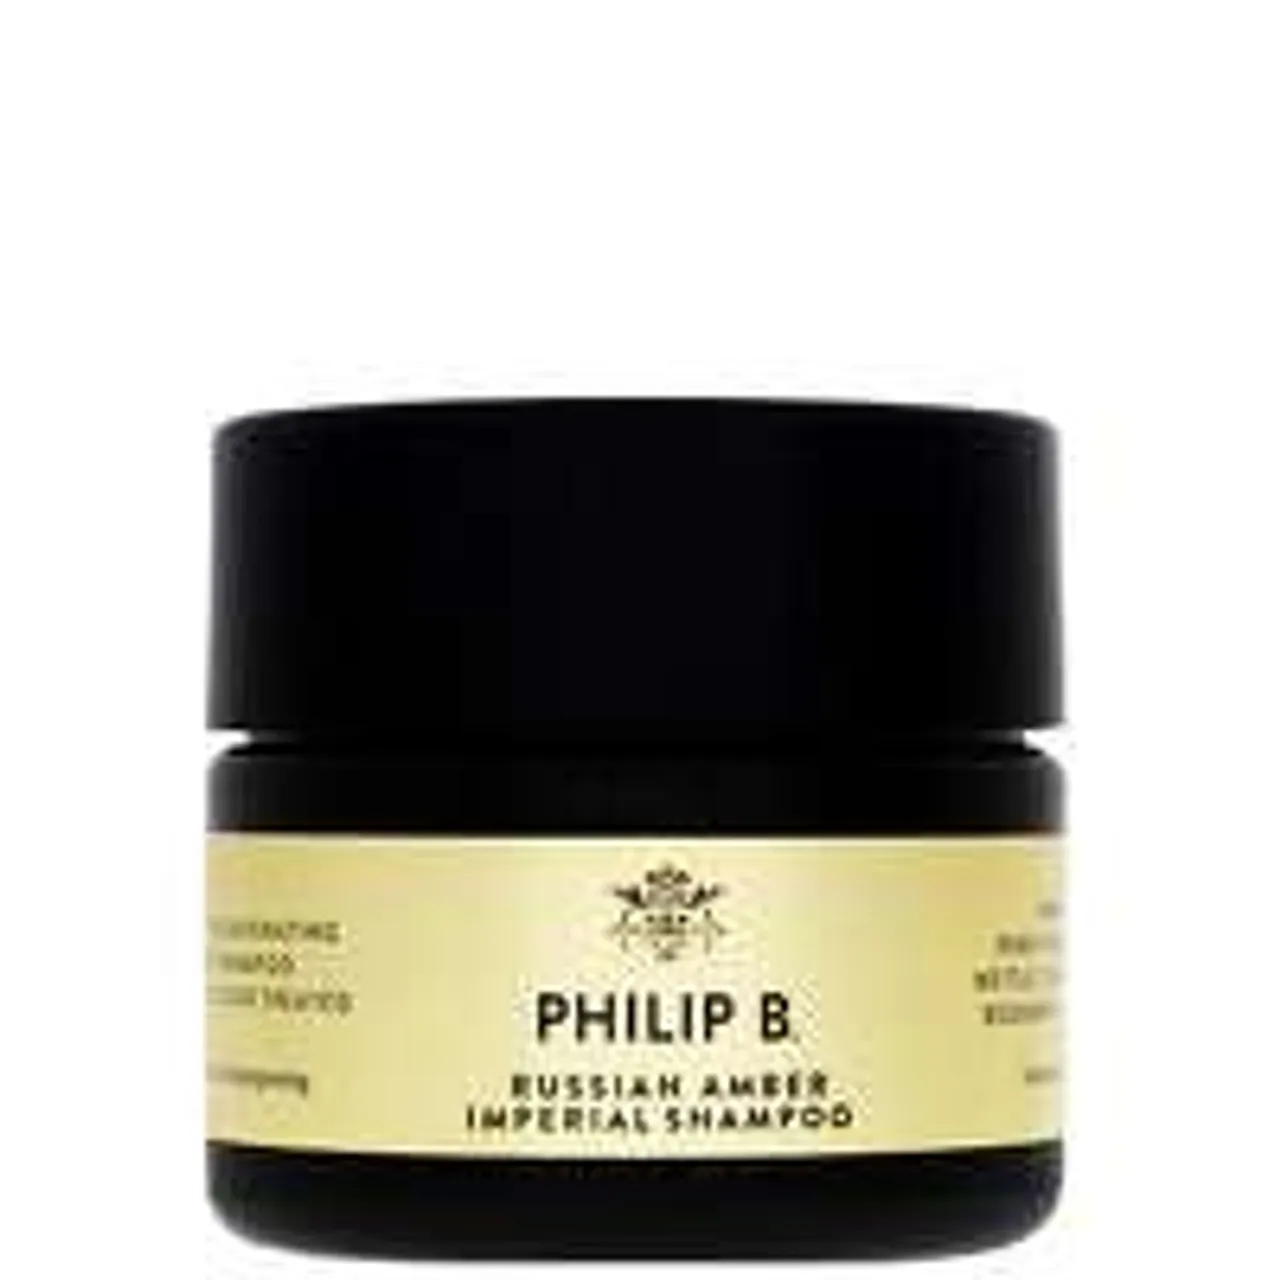 PHILIP B. Shampoo Russian Amber Imperial Shampoo 88ml